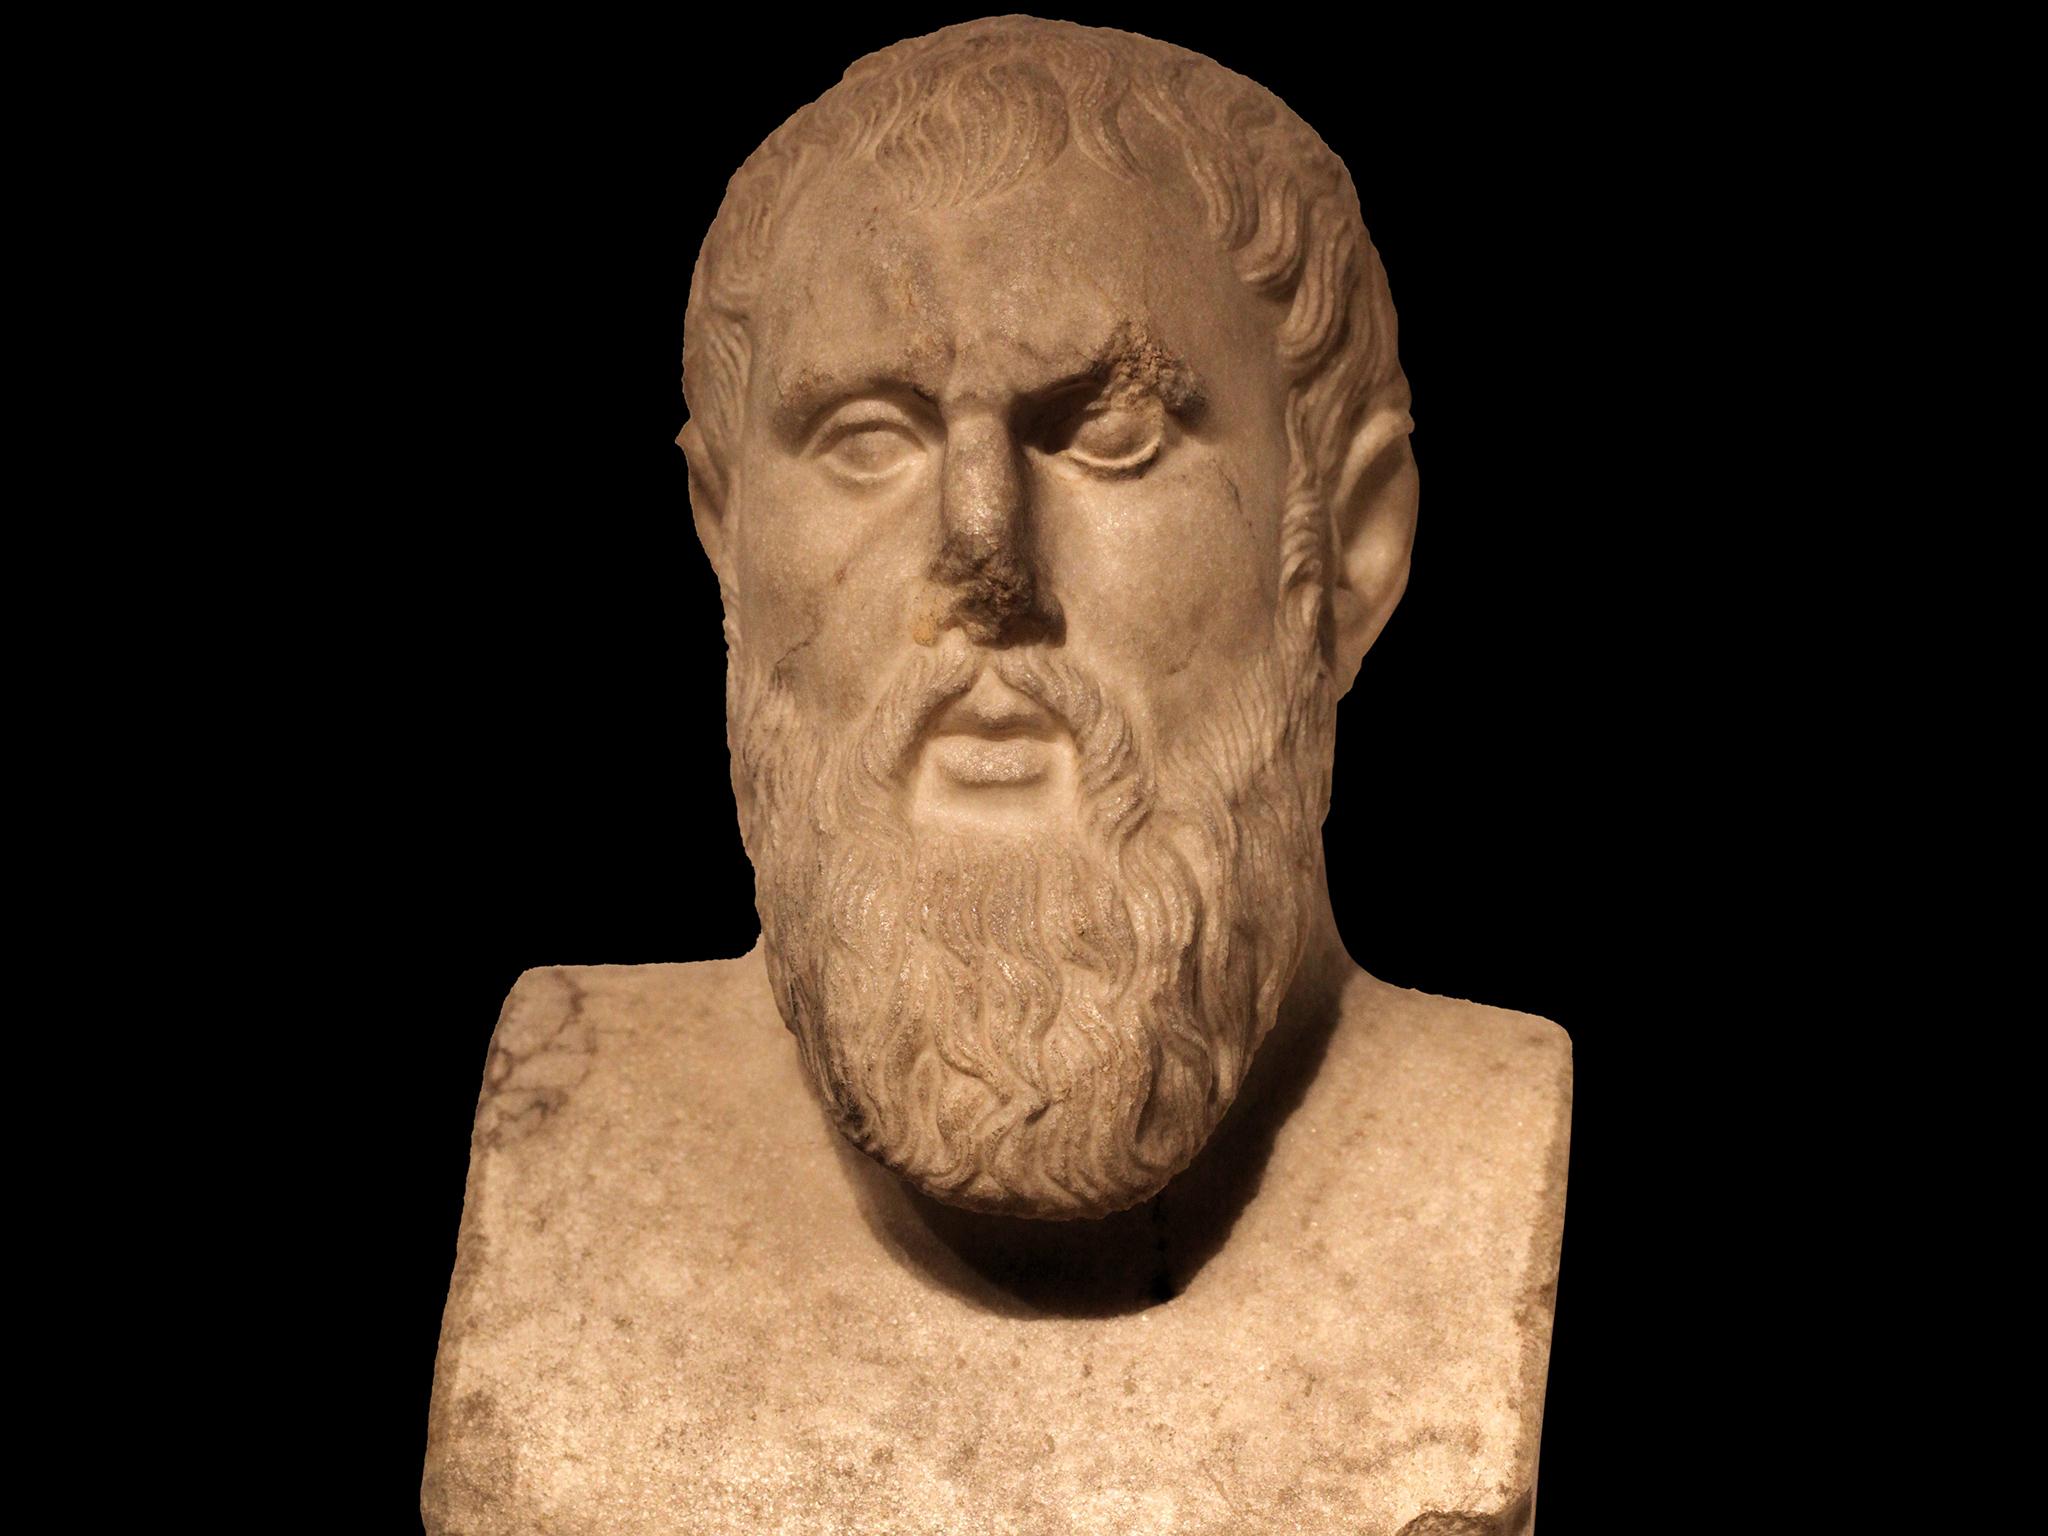 Zeno of Citium, the founder of the school of stoicism